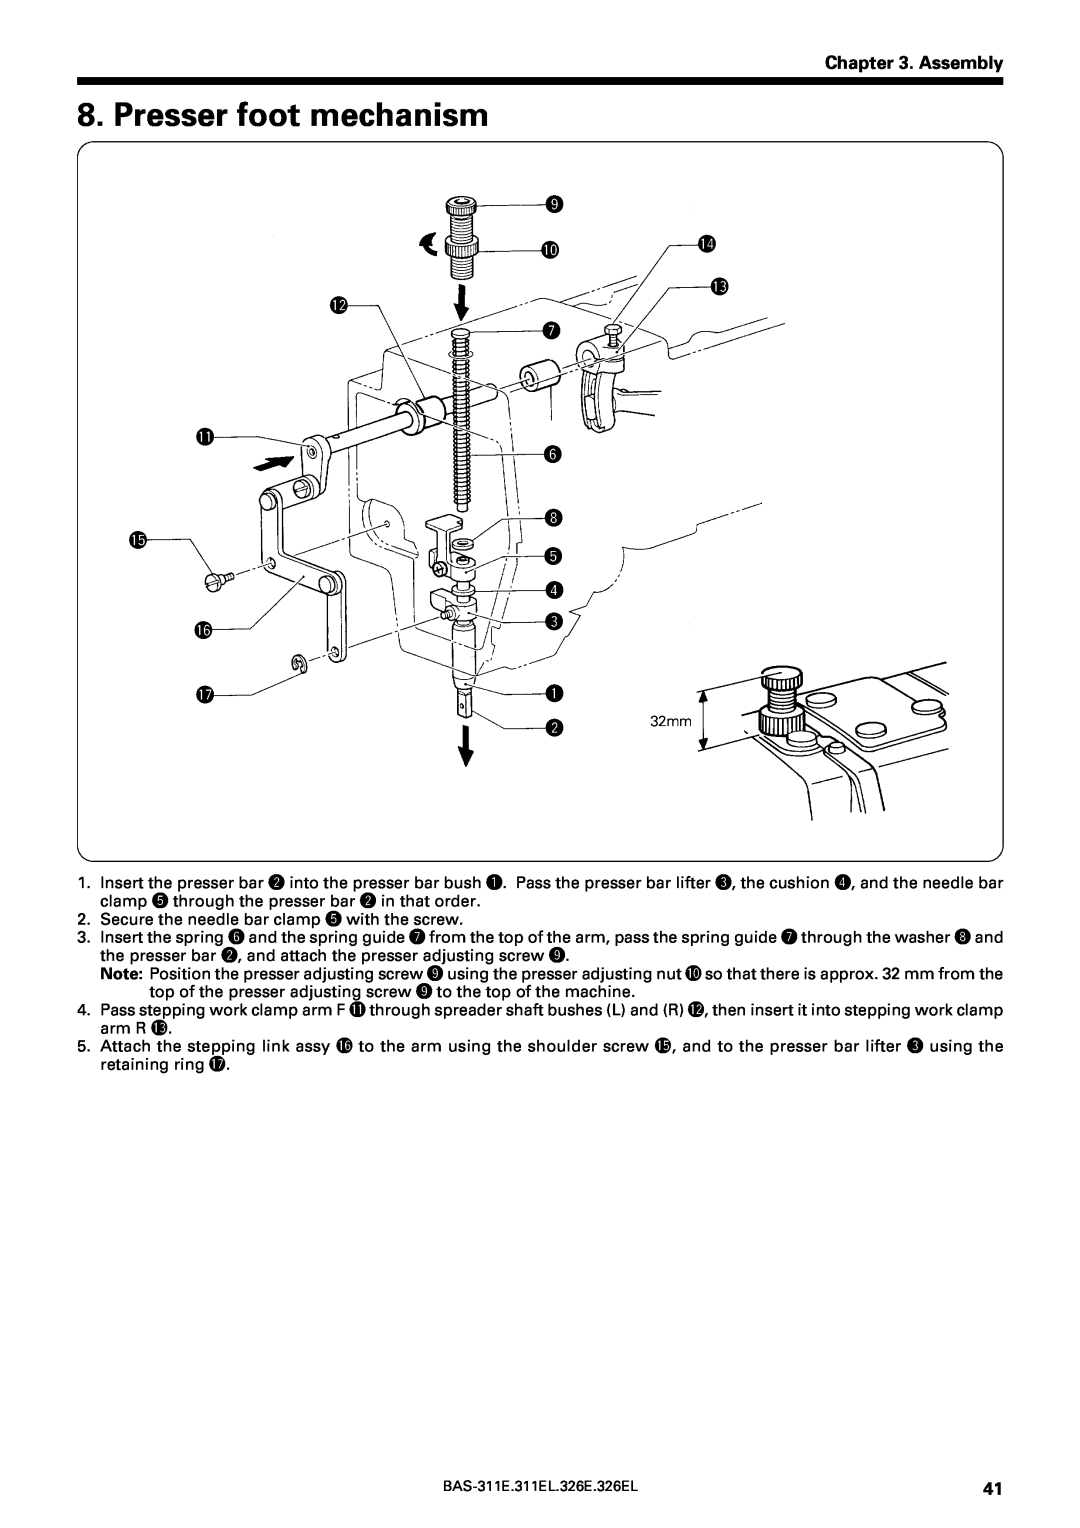 Brother BAS-311E service manual Presser foot mechanism, Assembly, o 0 !4 